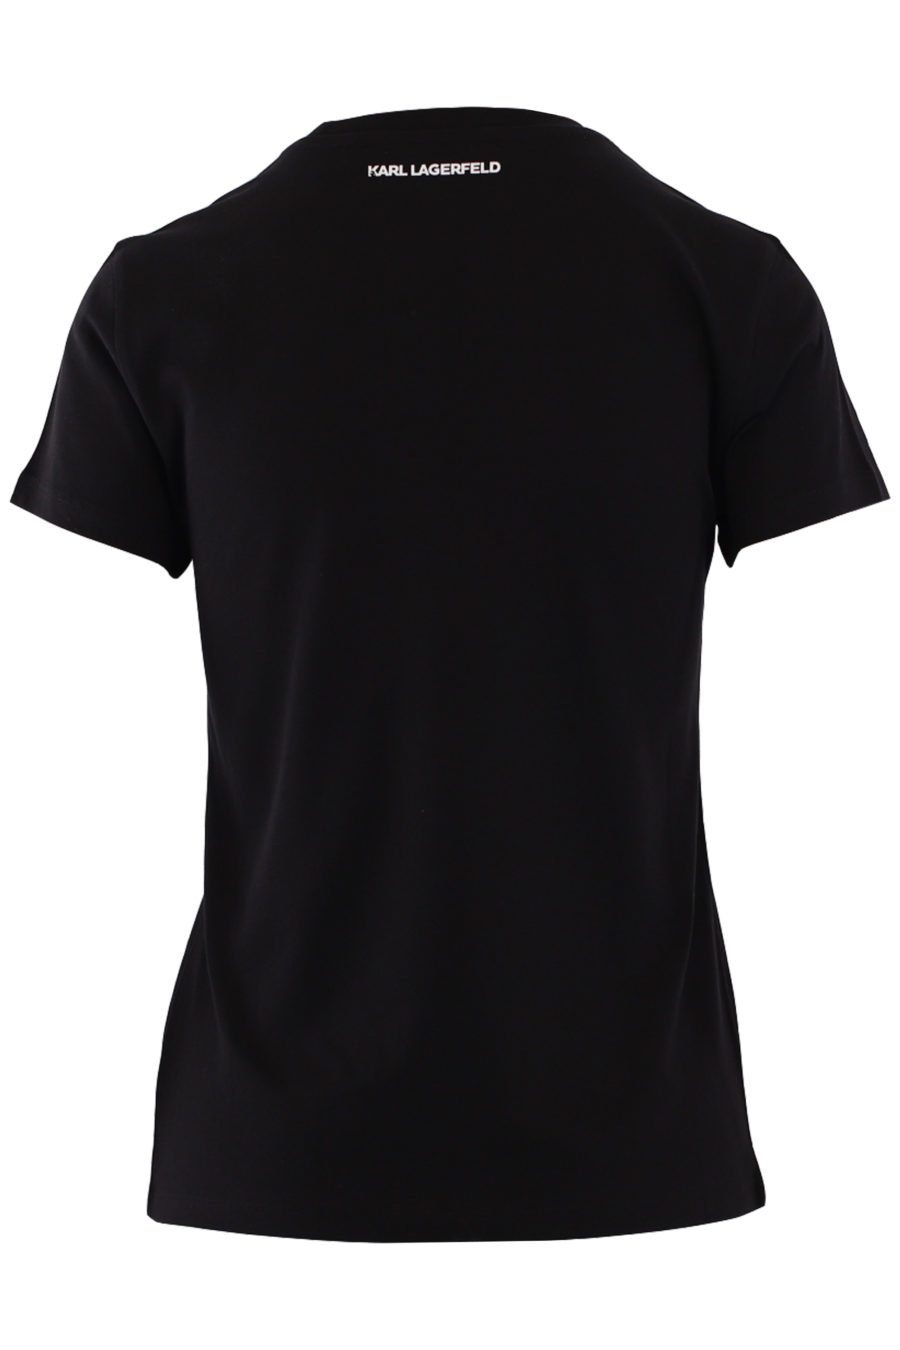 T-shirt noir avec logo zébré - IMG 9016